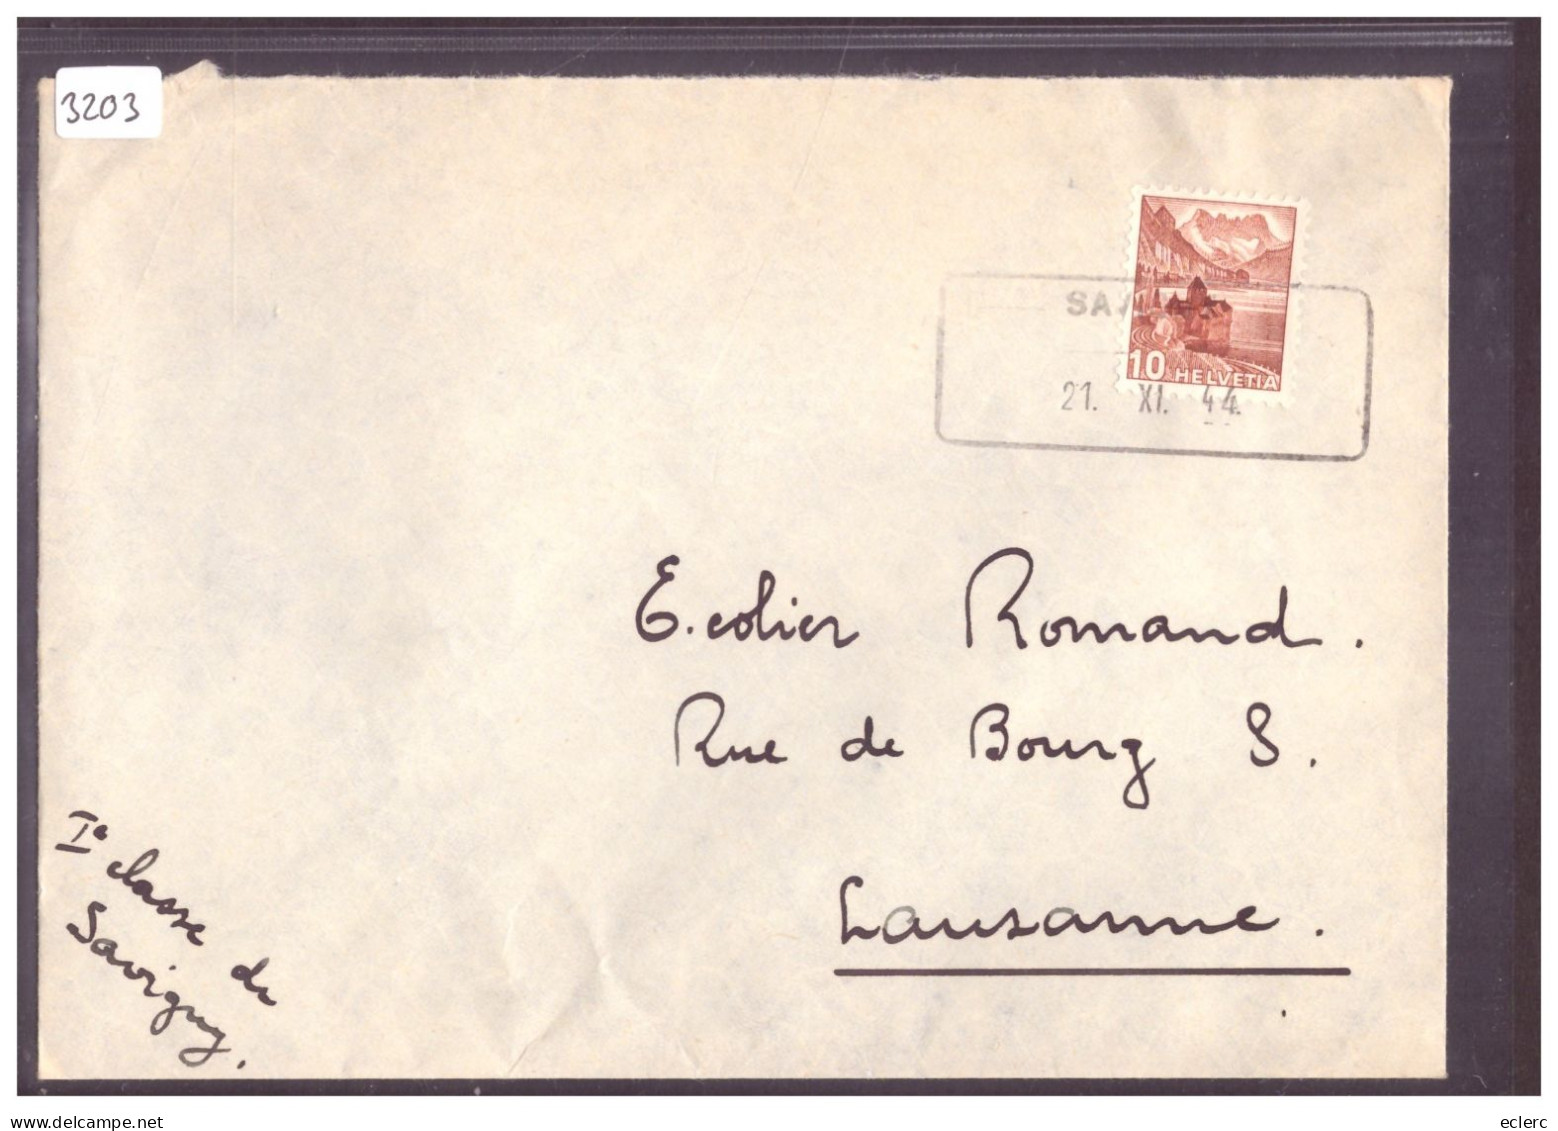 CACHET DE REMPLACEMENT " SAVIGNY 21.XI.44 " - AUSHILFSTEMPEL - - Postmark Collection